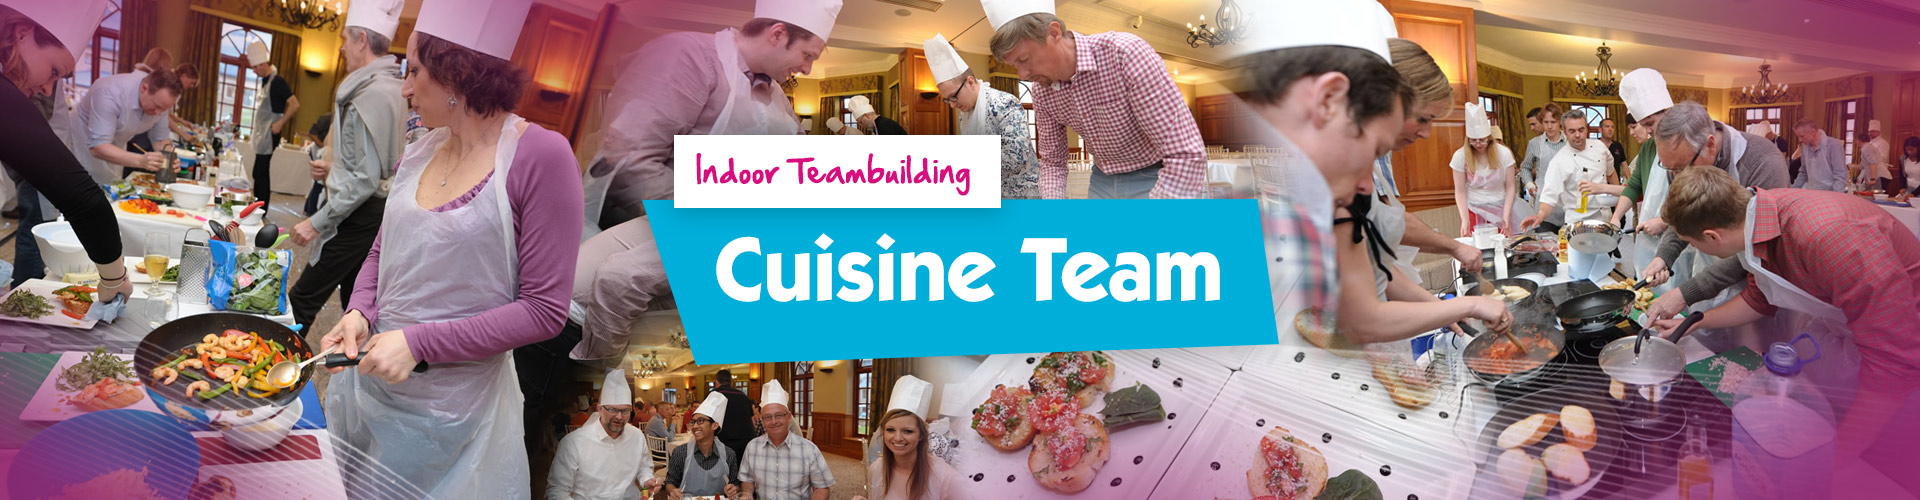 Teambuilding | Cuisine Team